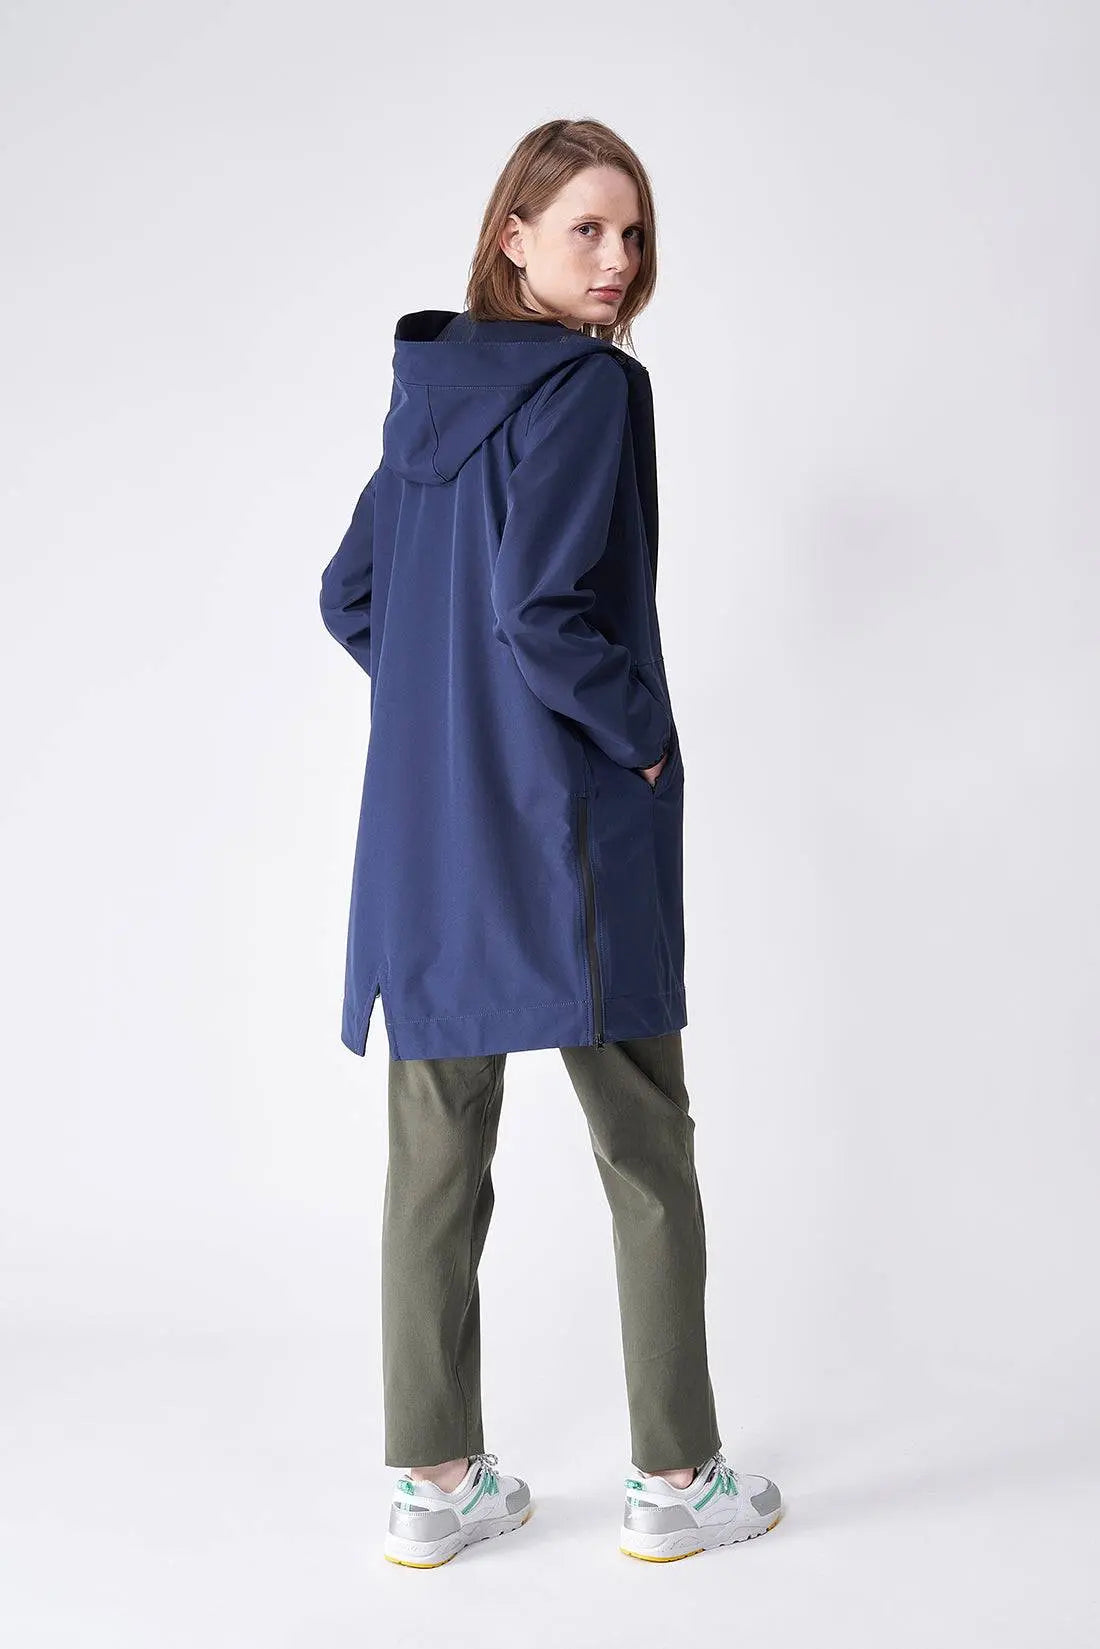 Chubasquero impermeable y transpirable para mujer, chaqueta ligera